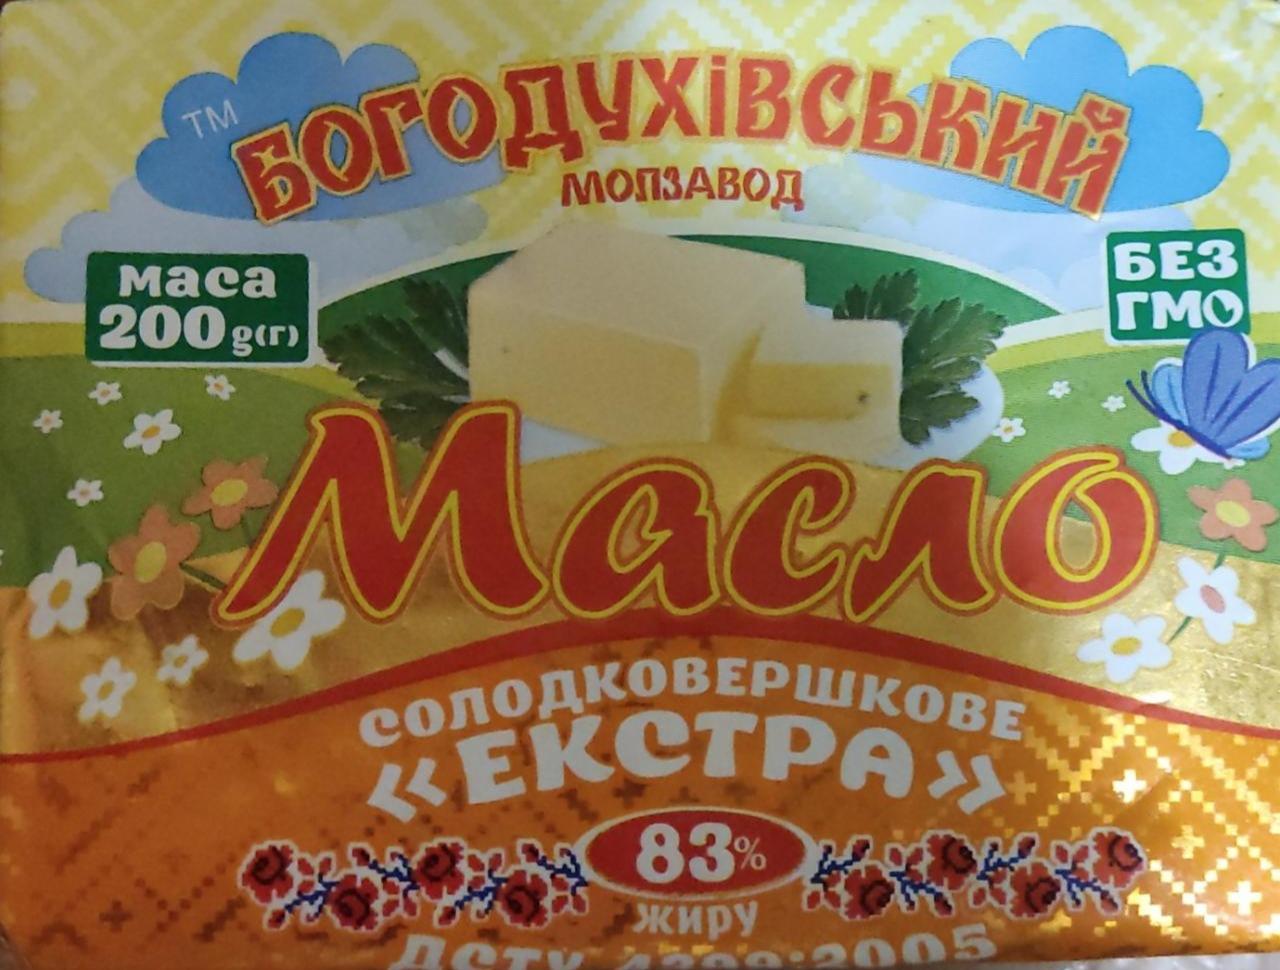 Фото - Масло солодковершкове Екстра 83% жиру Богодухівський молзавод